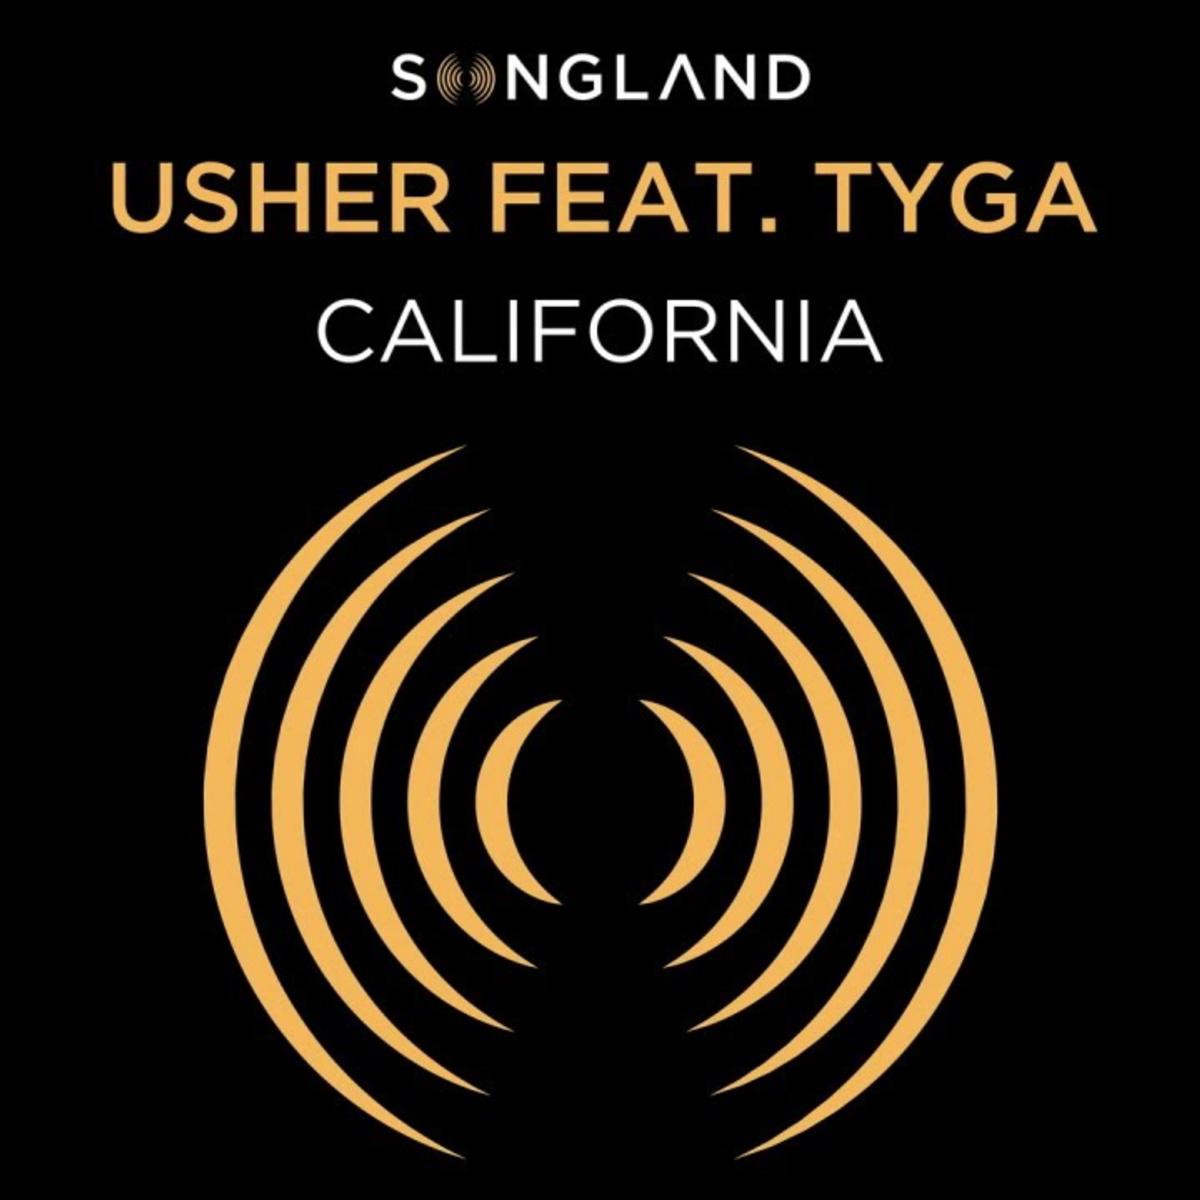 Usher - California (from Songland) (feat. Tyga)